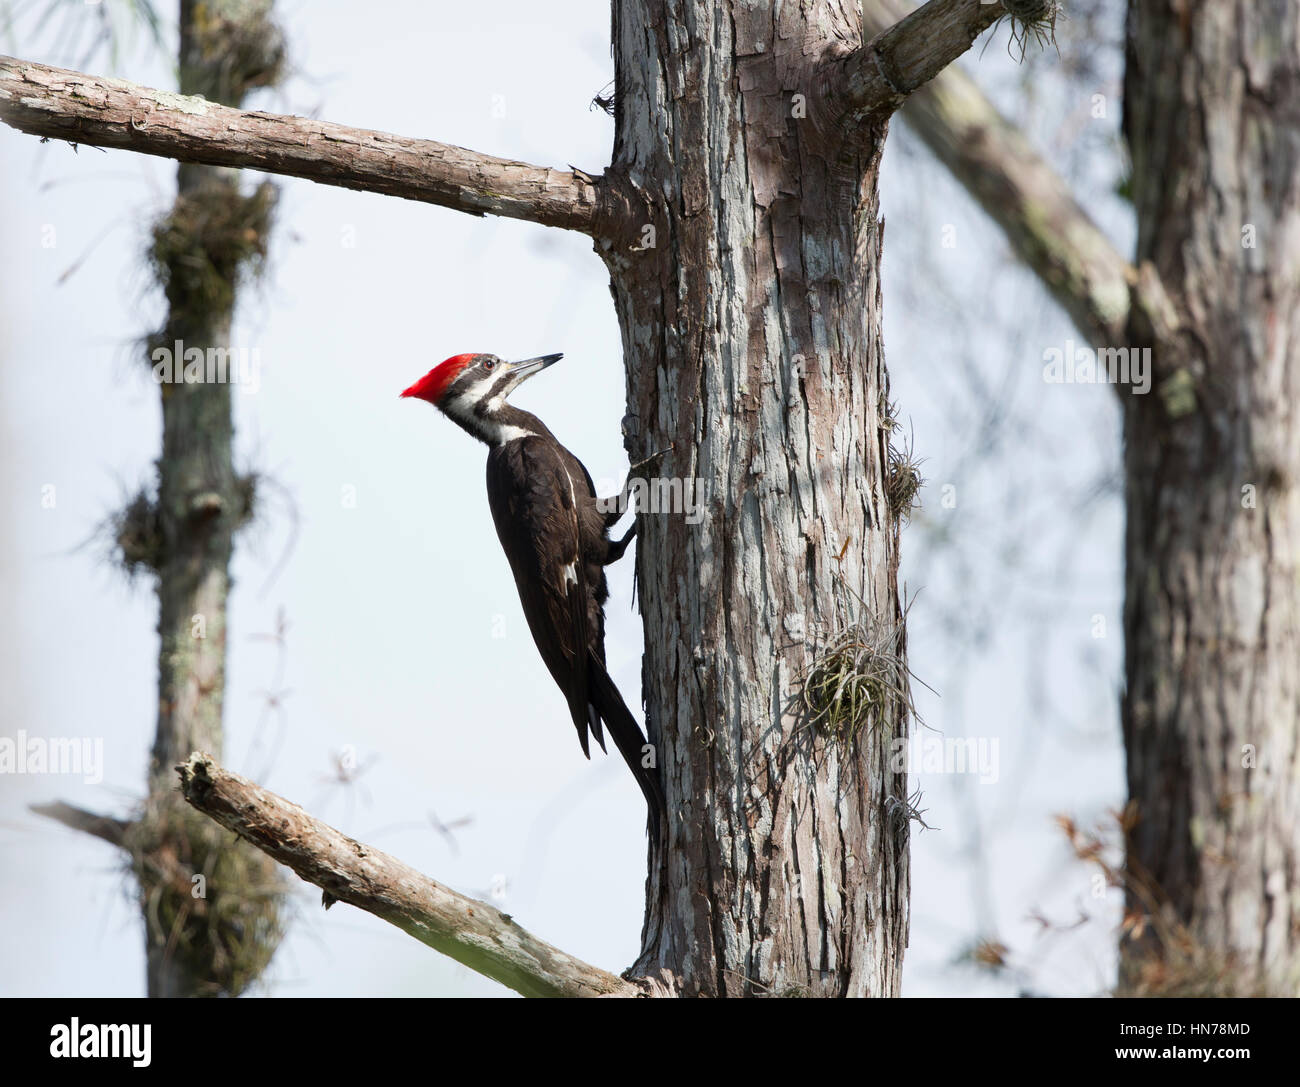 Pileated Woodpecker (Dry0c0pus pileatus) climbing a pine tree Stock Photo